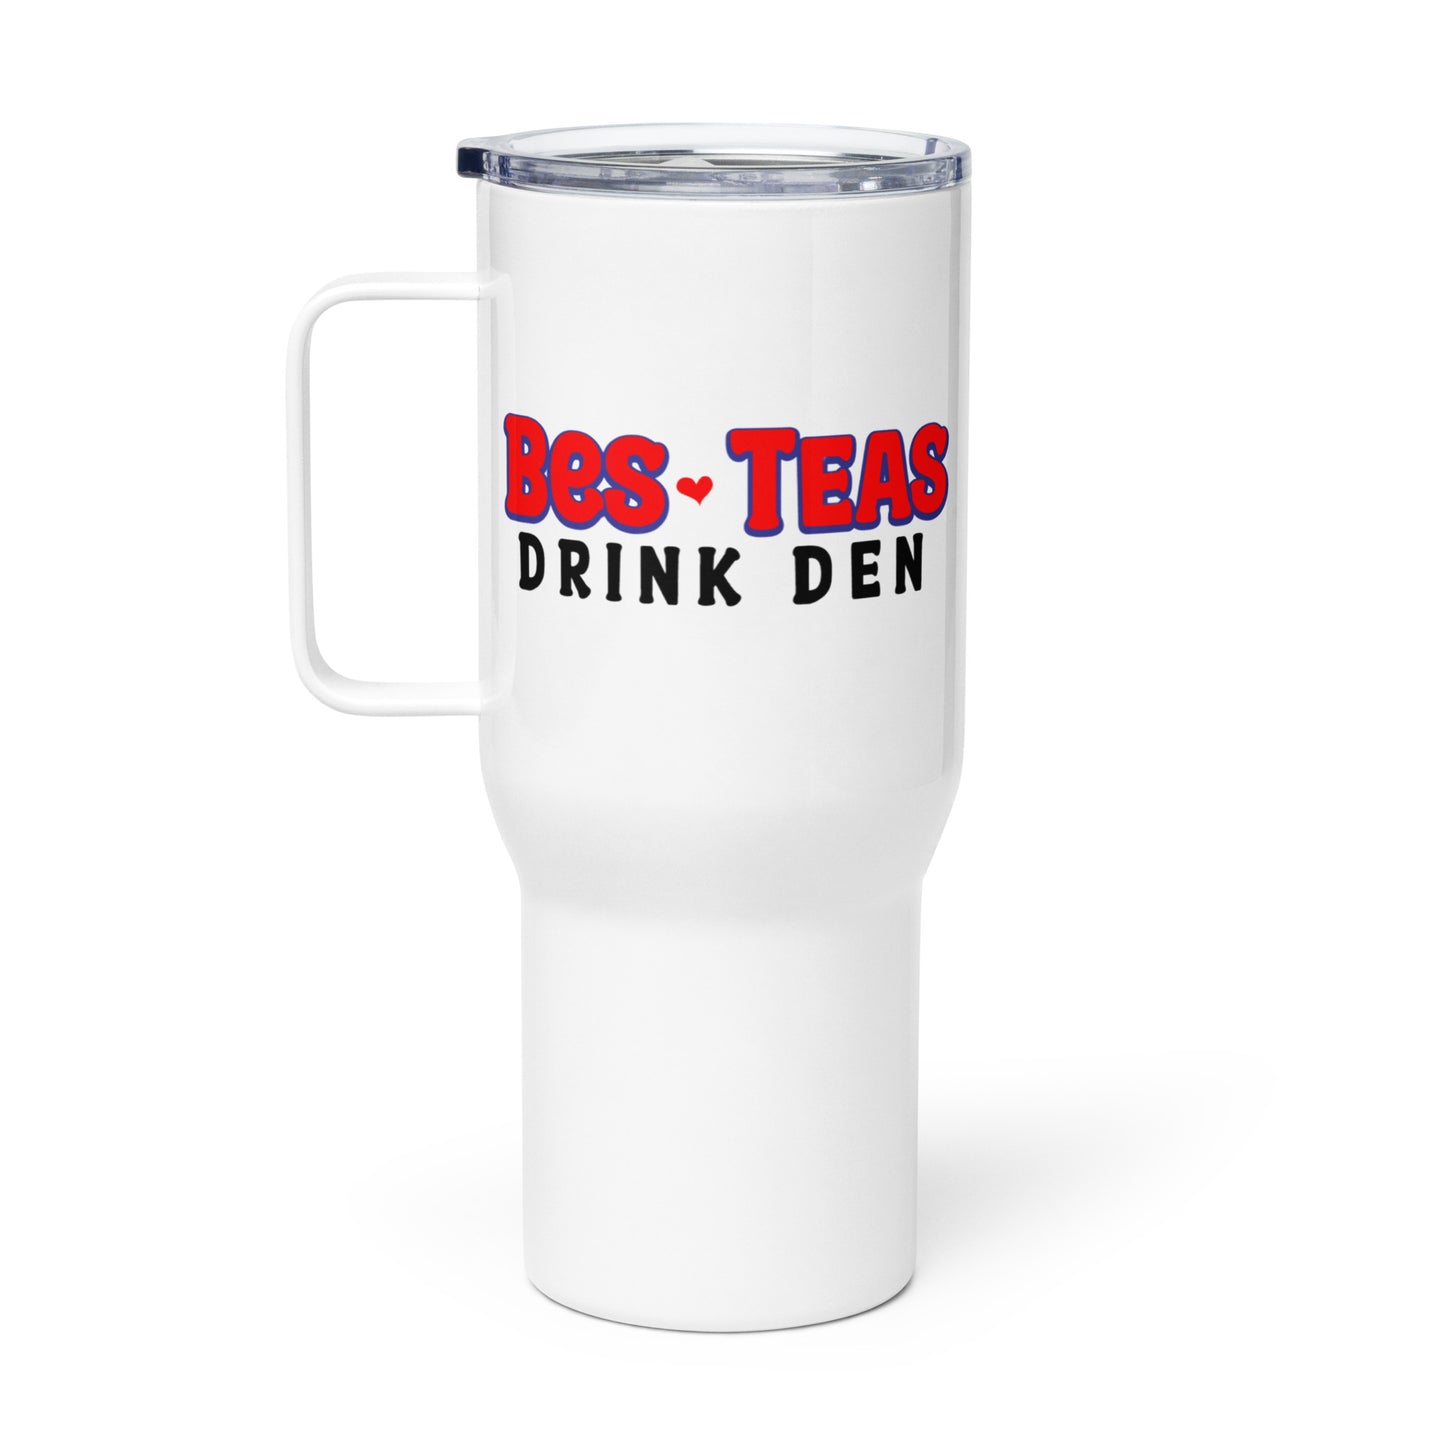 BesTEAS Drink Den Travel Mug